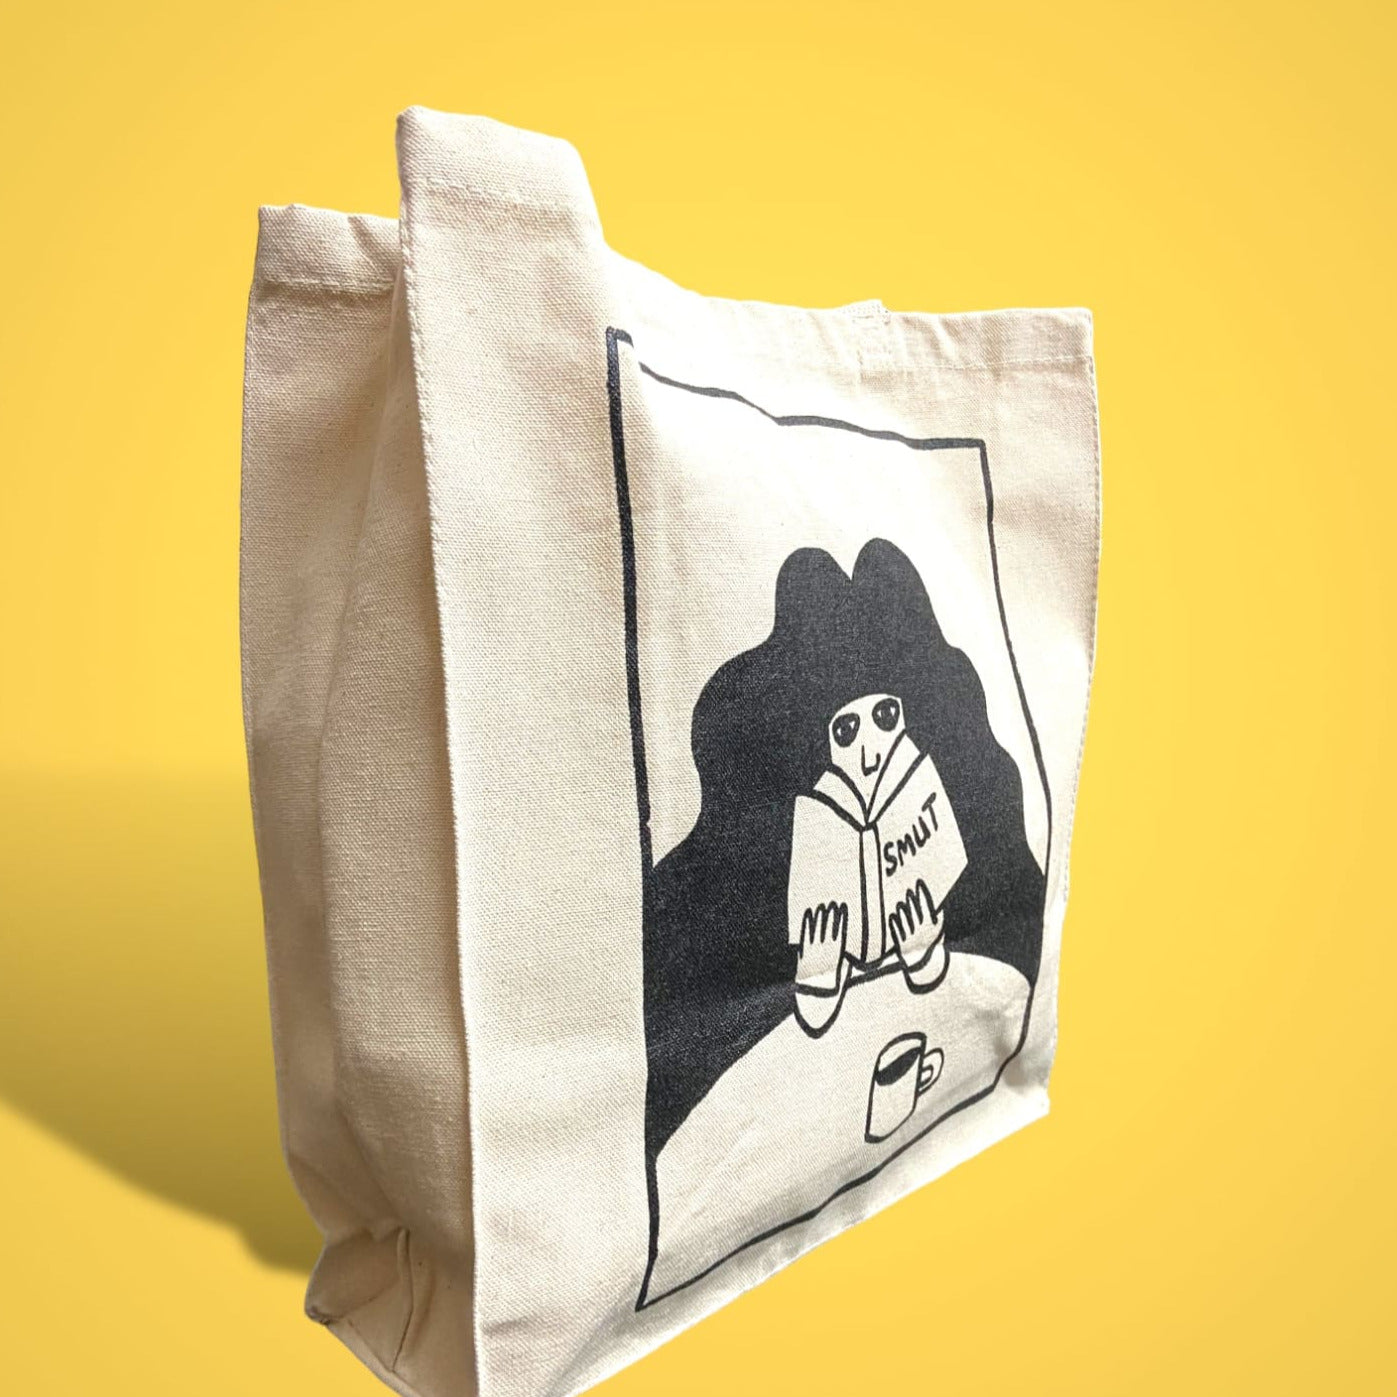 Smut Tote Bag Funny Gift - Illustration - Reusable Tote Bag